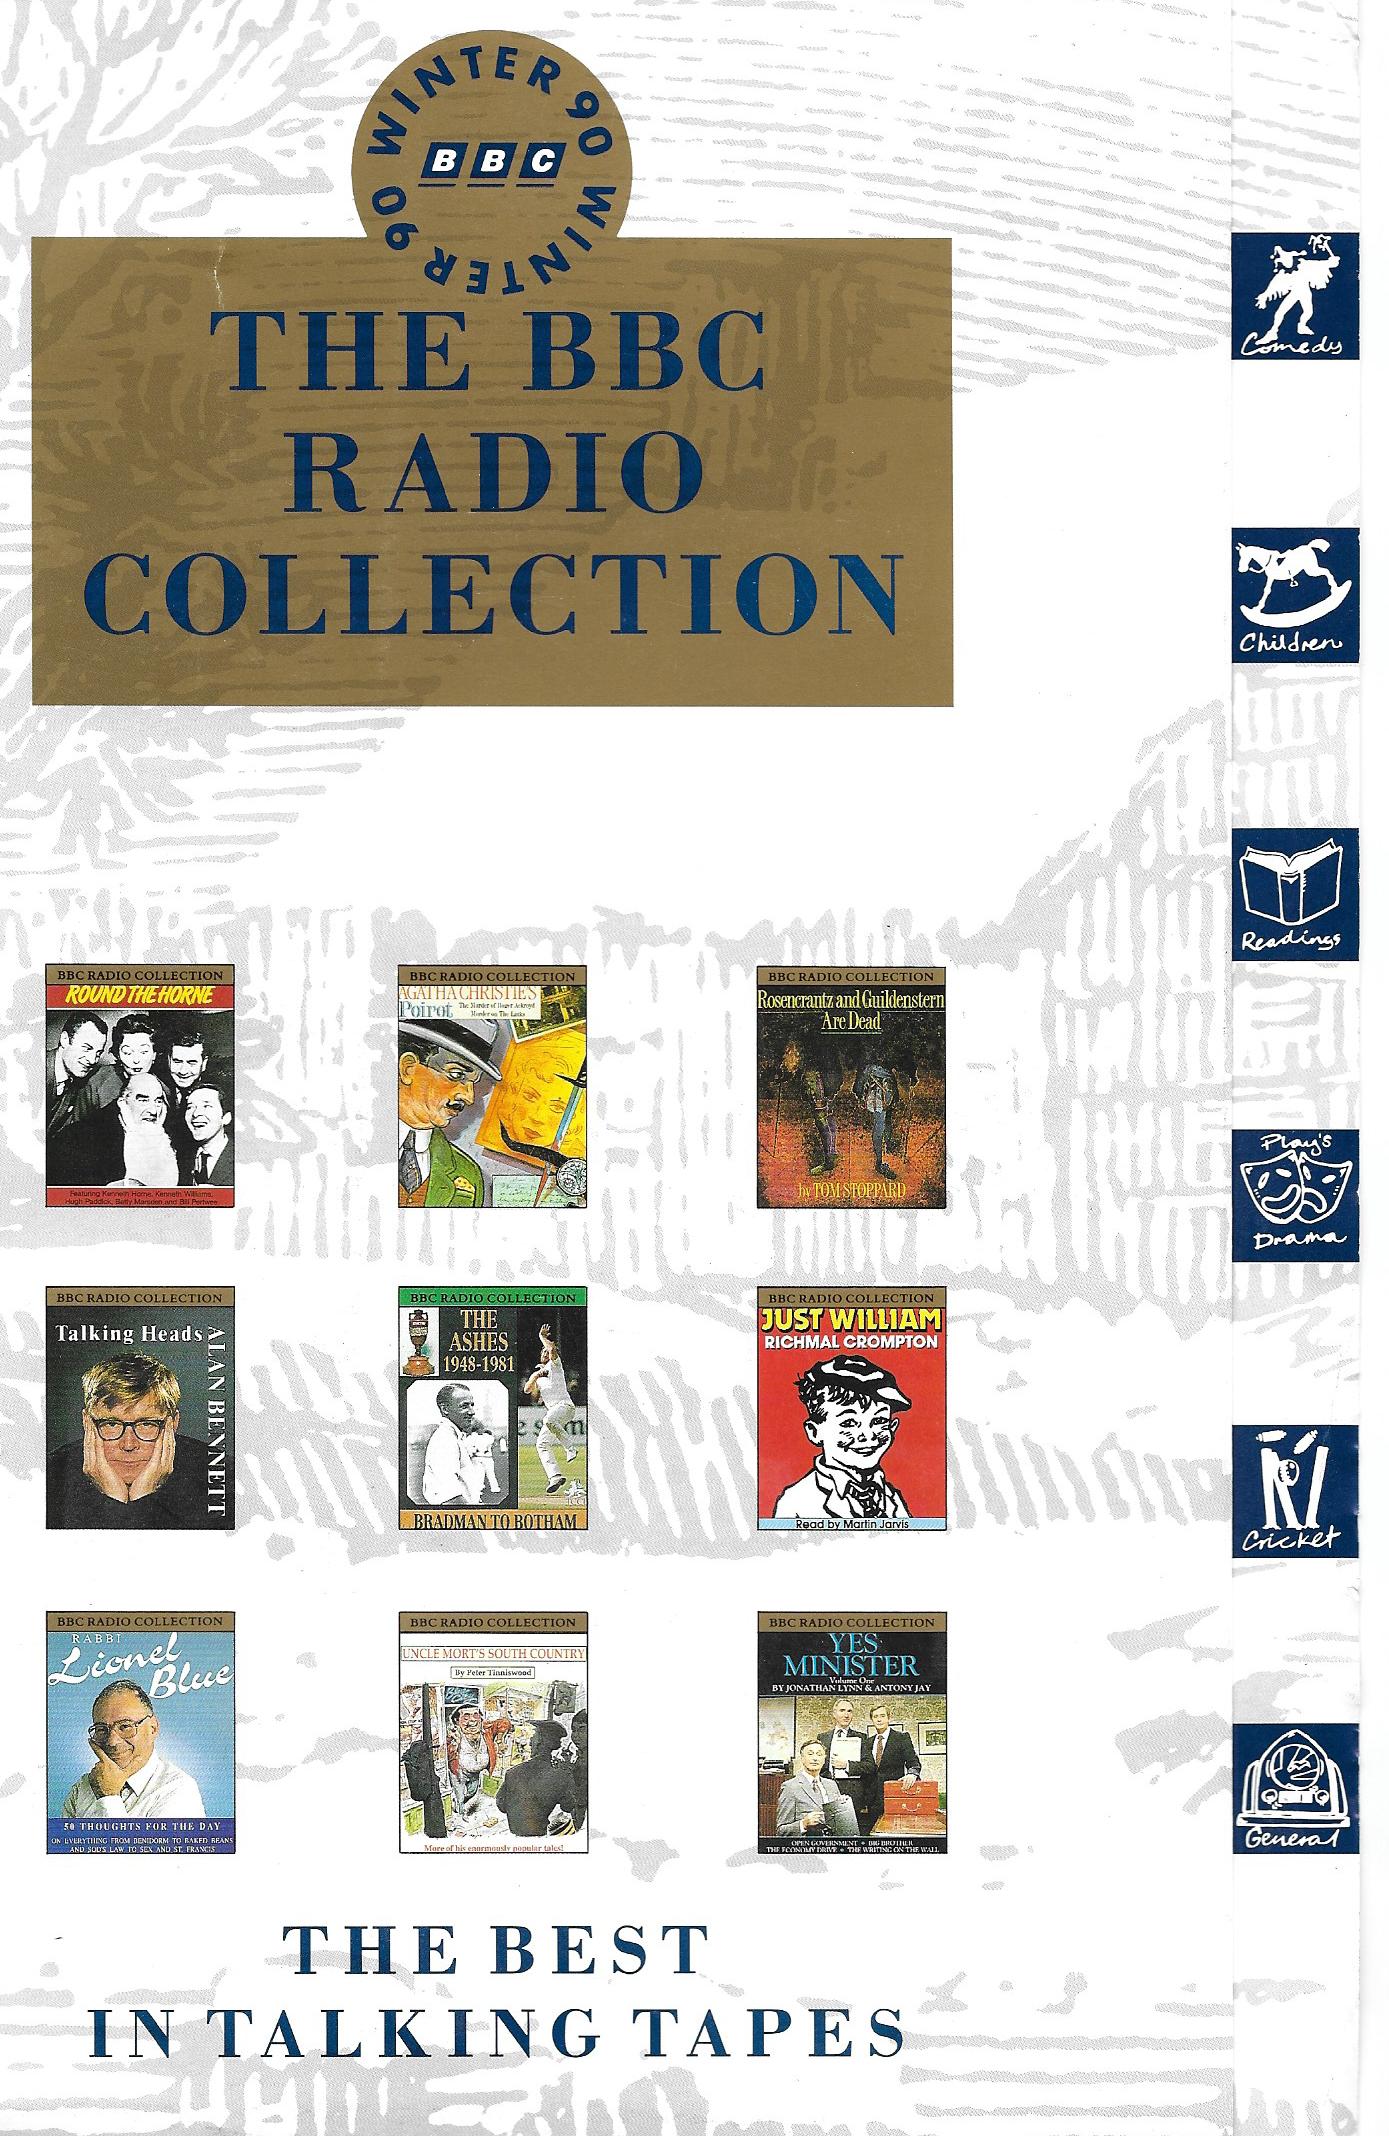 BBC Radio Collection catalogue 1990.